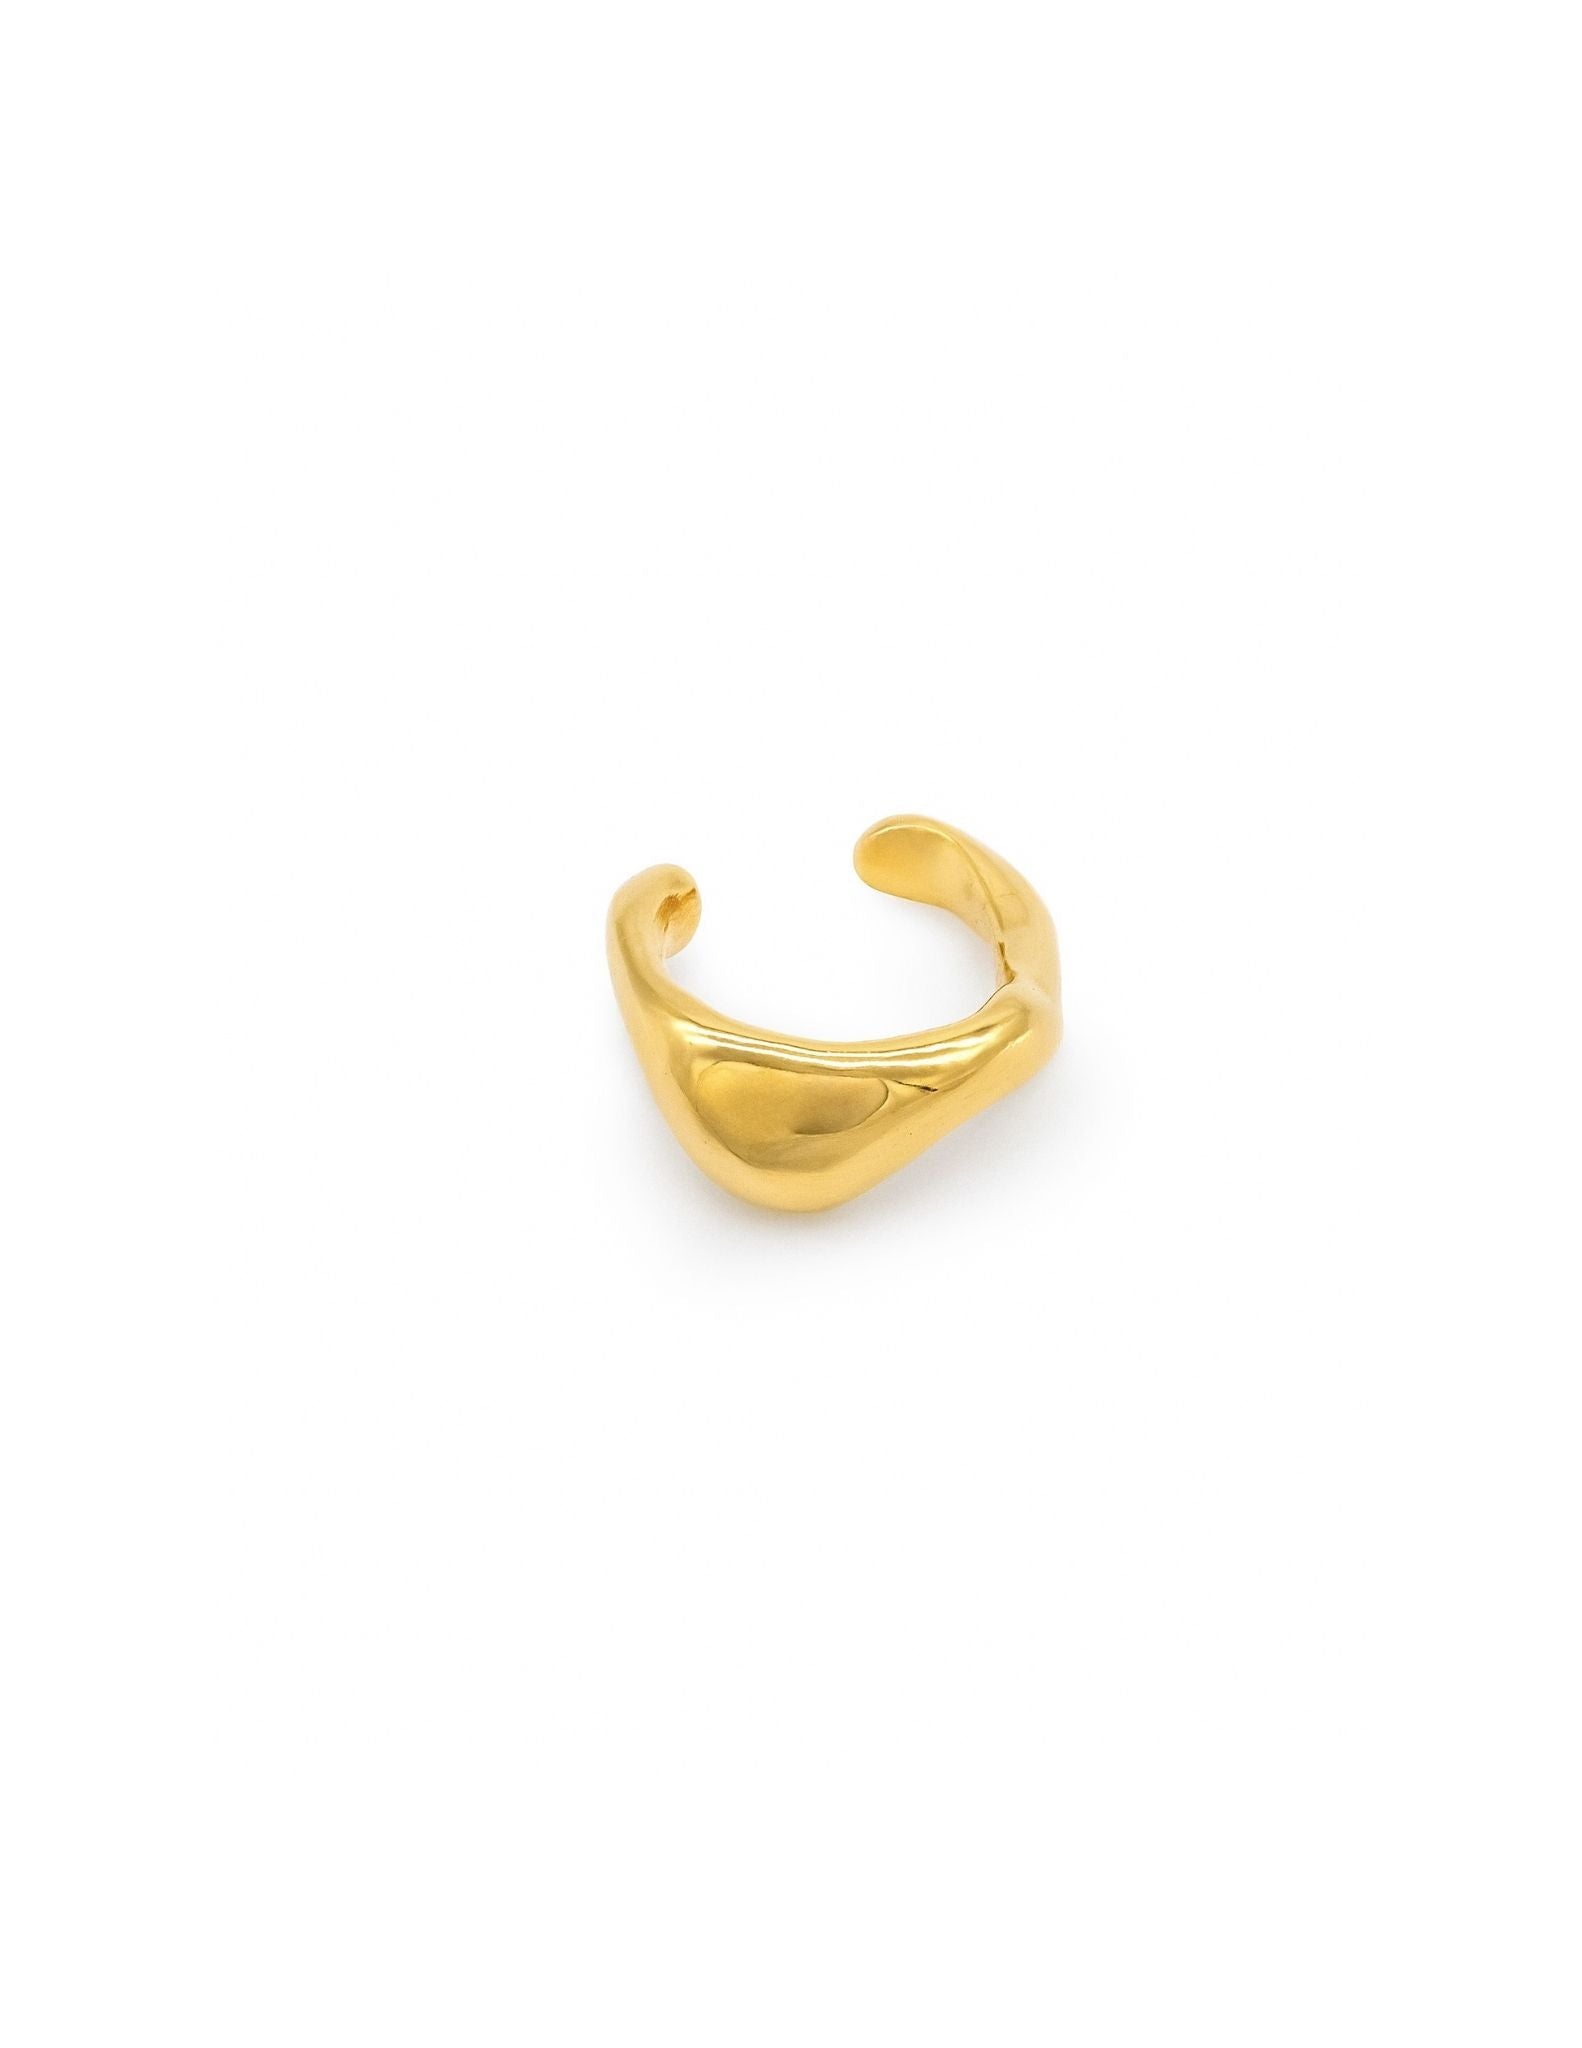 Kharys jewelry organic shaped drip ear cuff in 18k gold vermeil